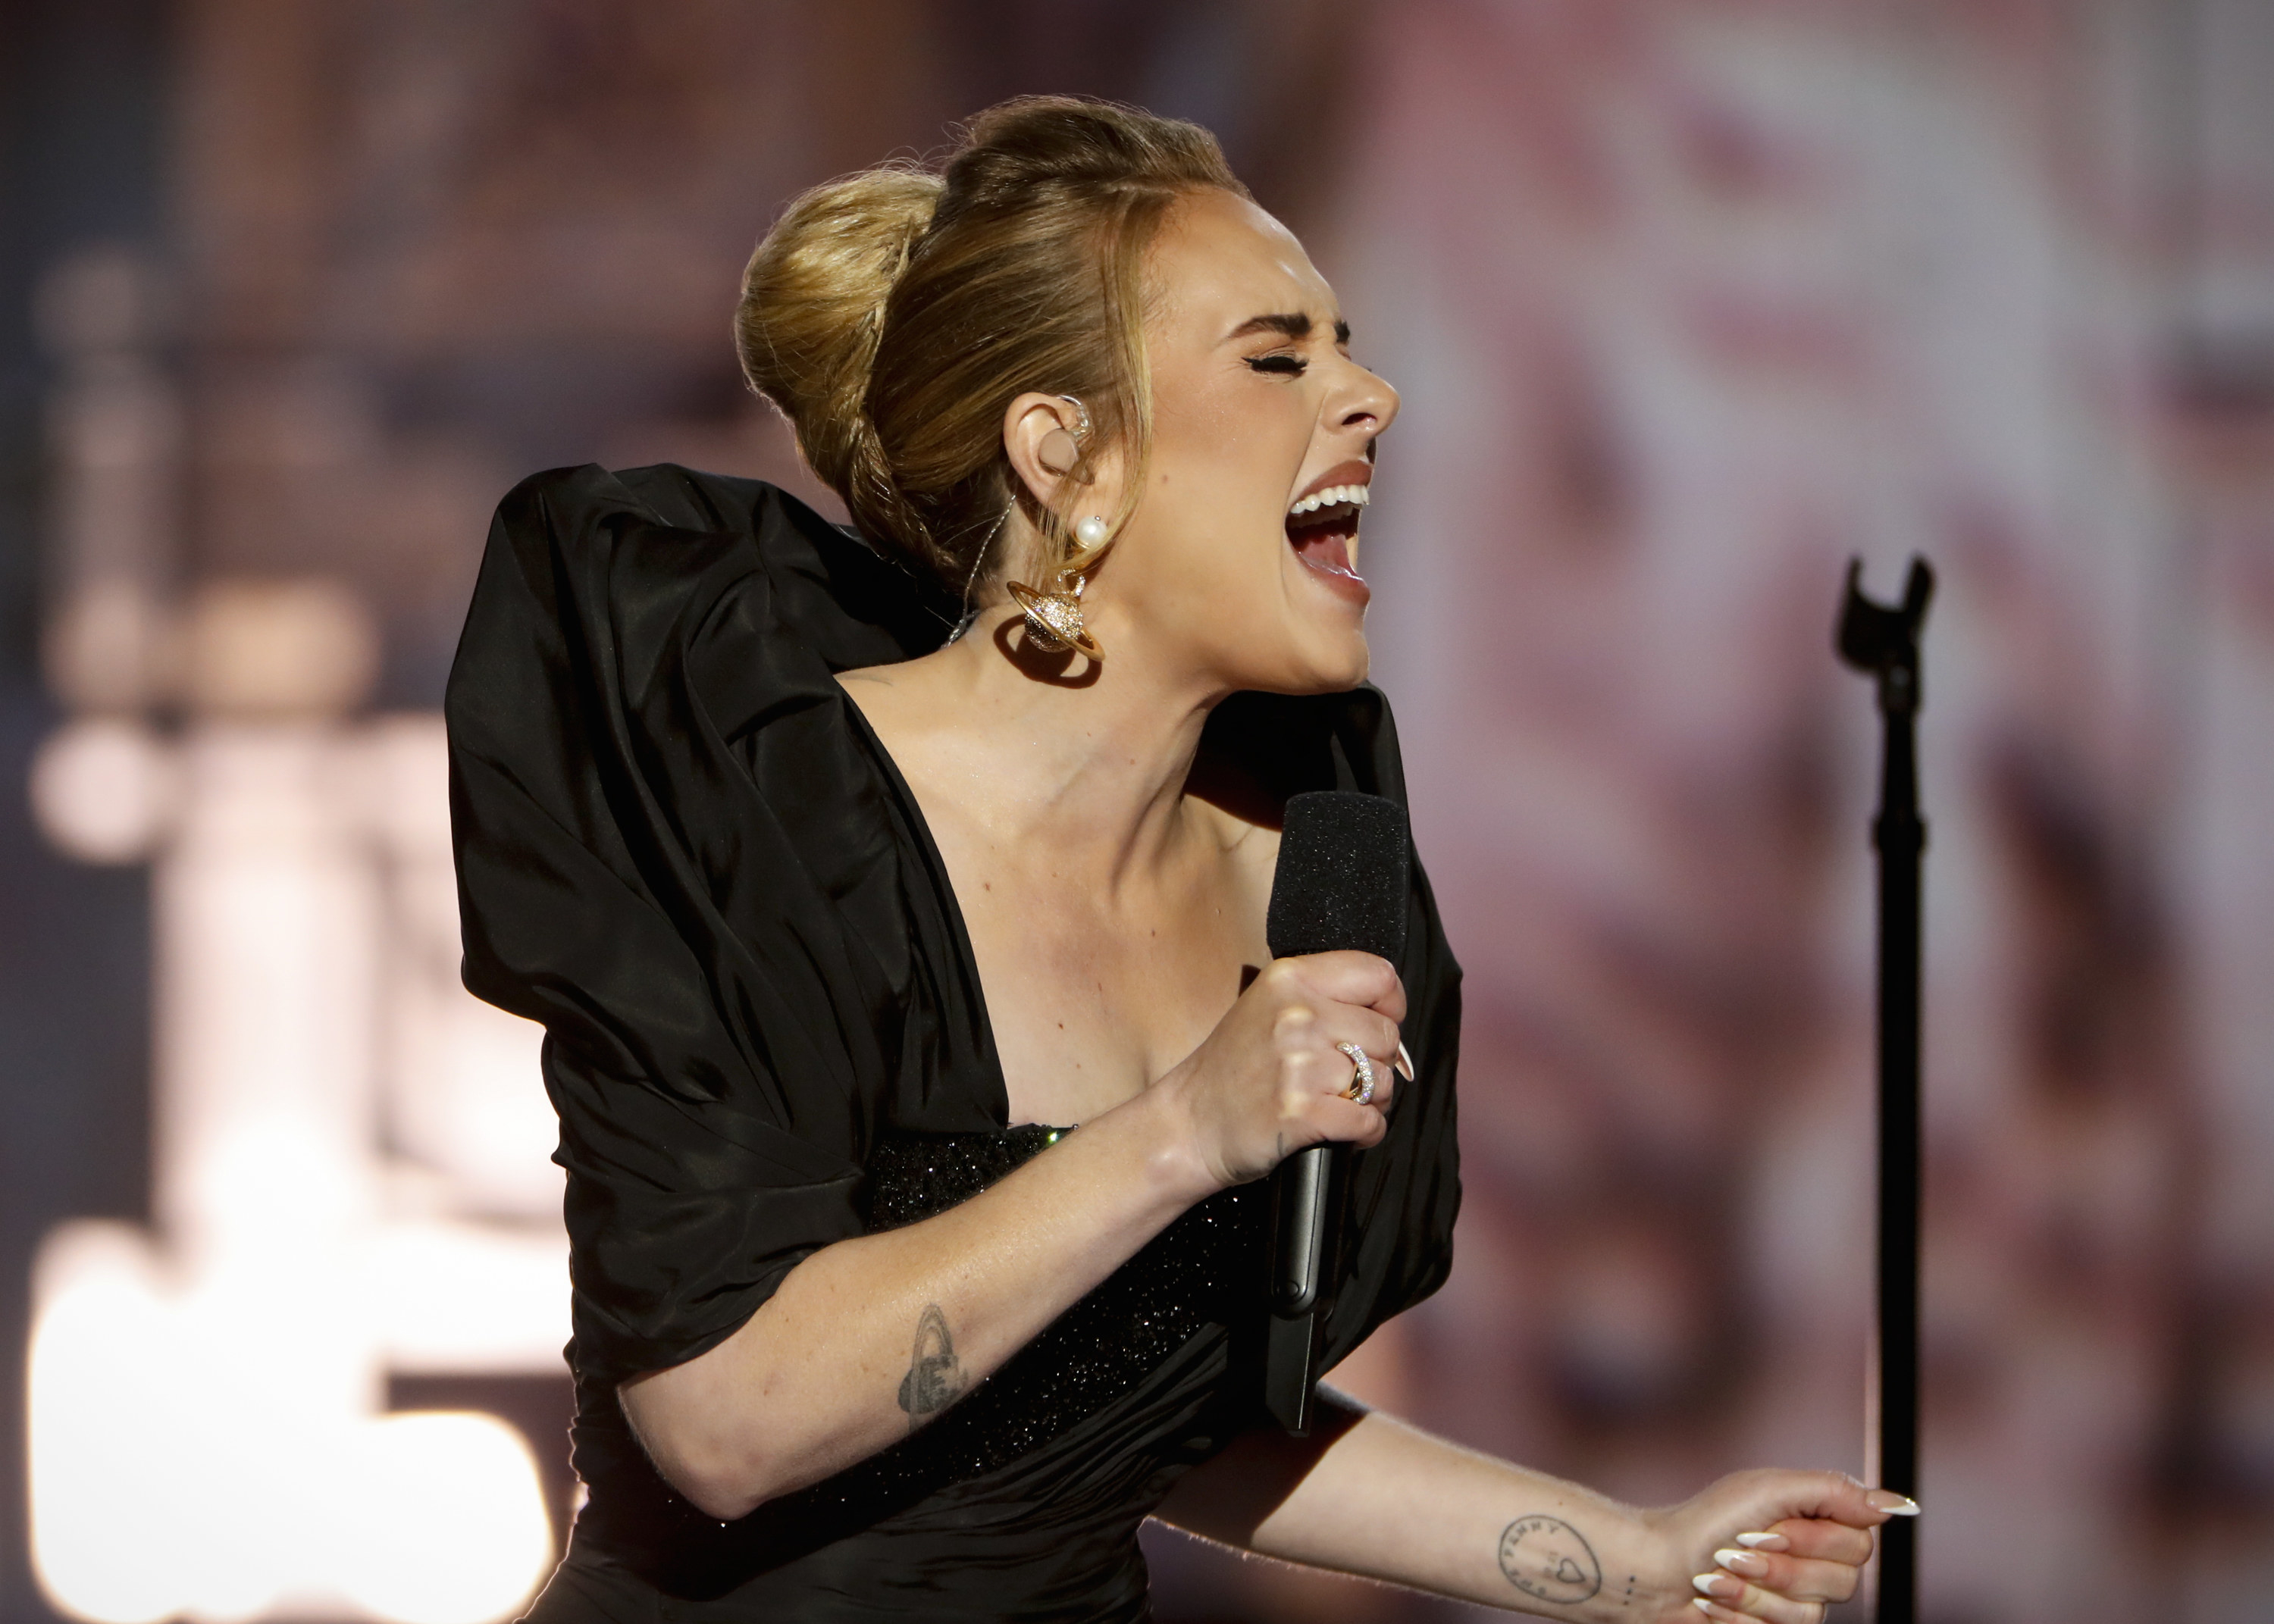 Adele singing onstage